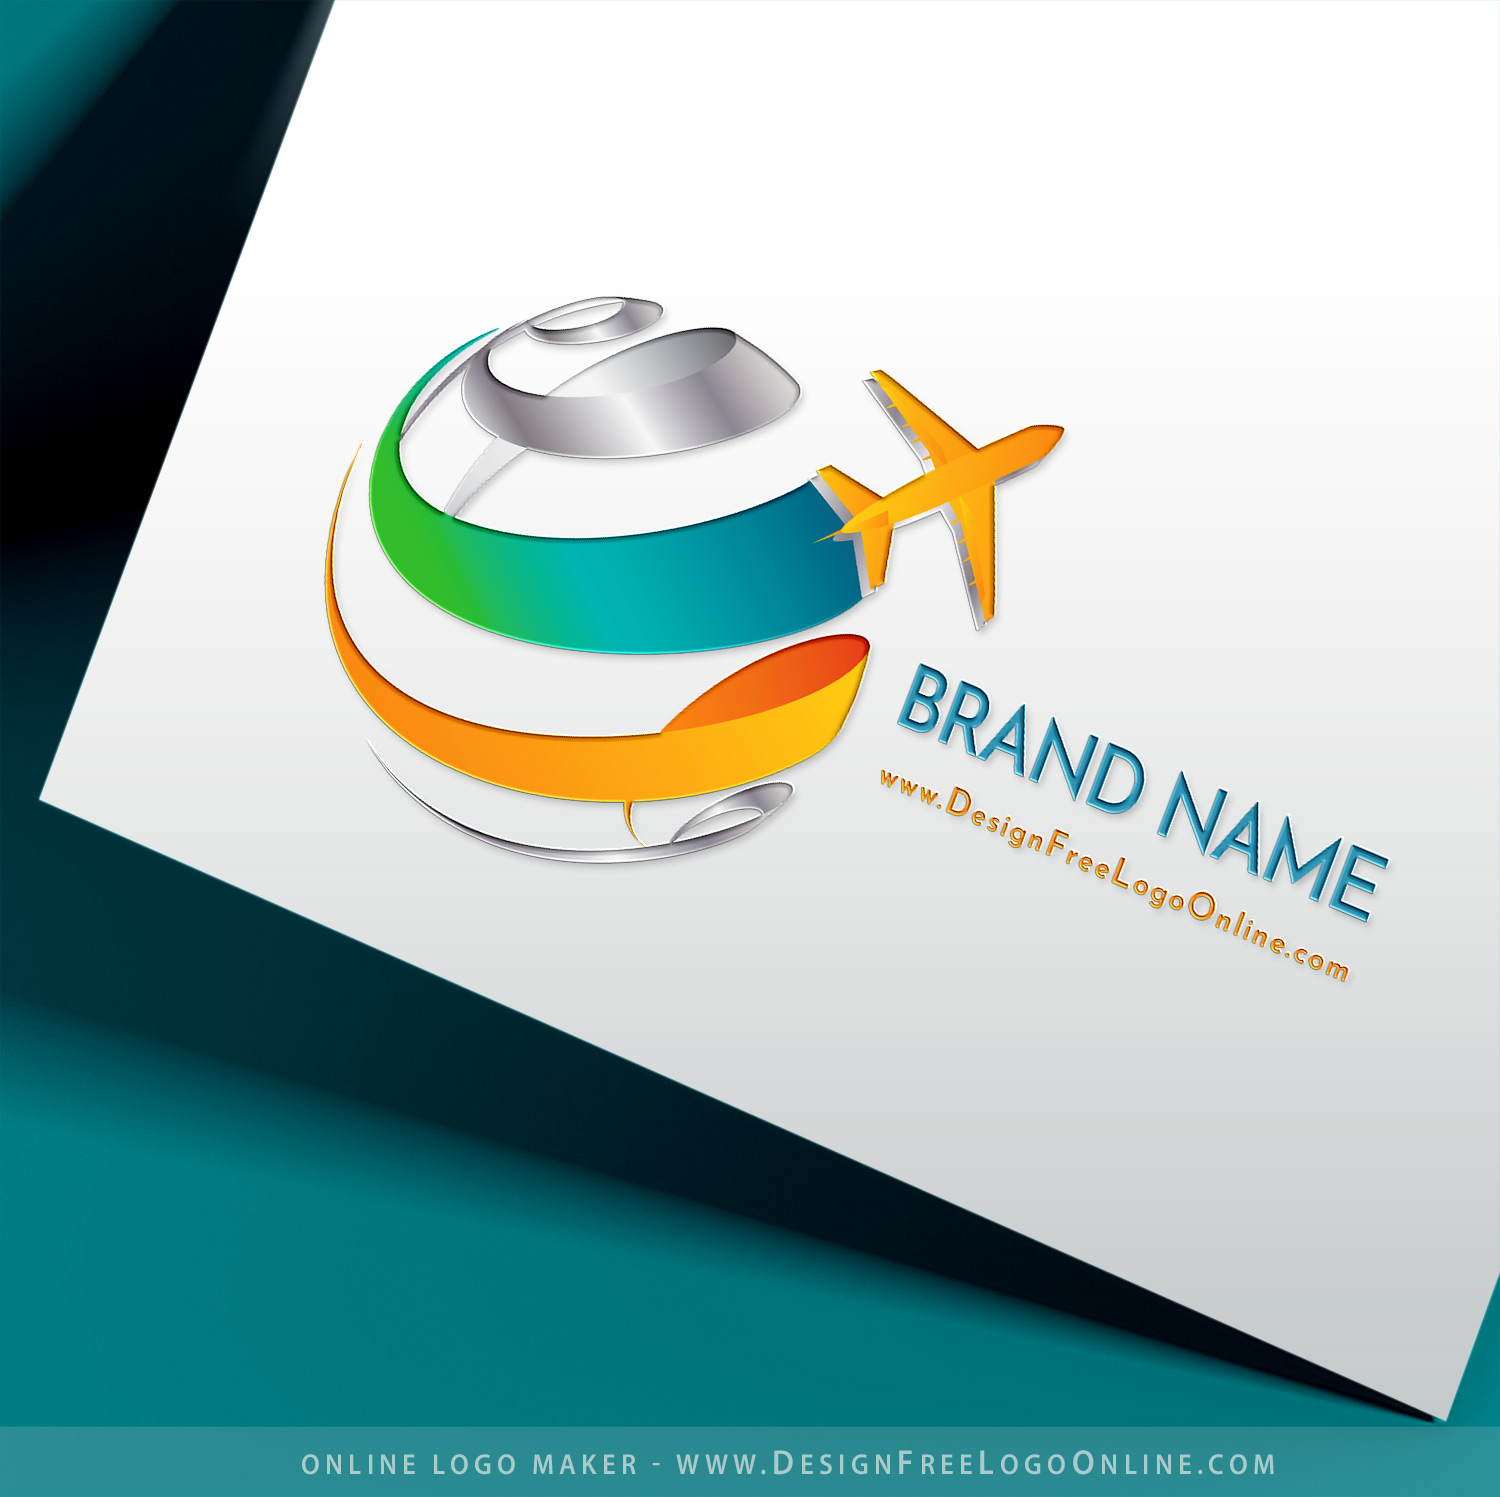 تويتر \\ Design Free Logo Online - Logo Makers على تويتر: \